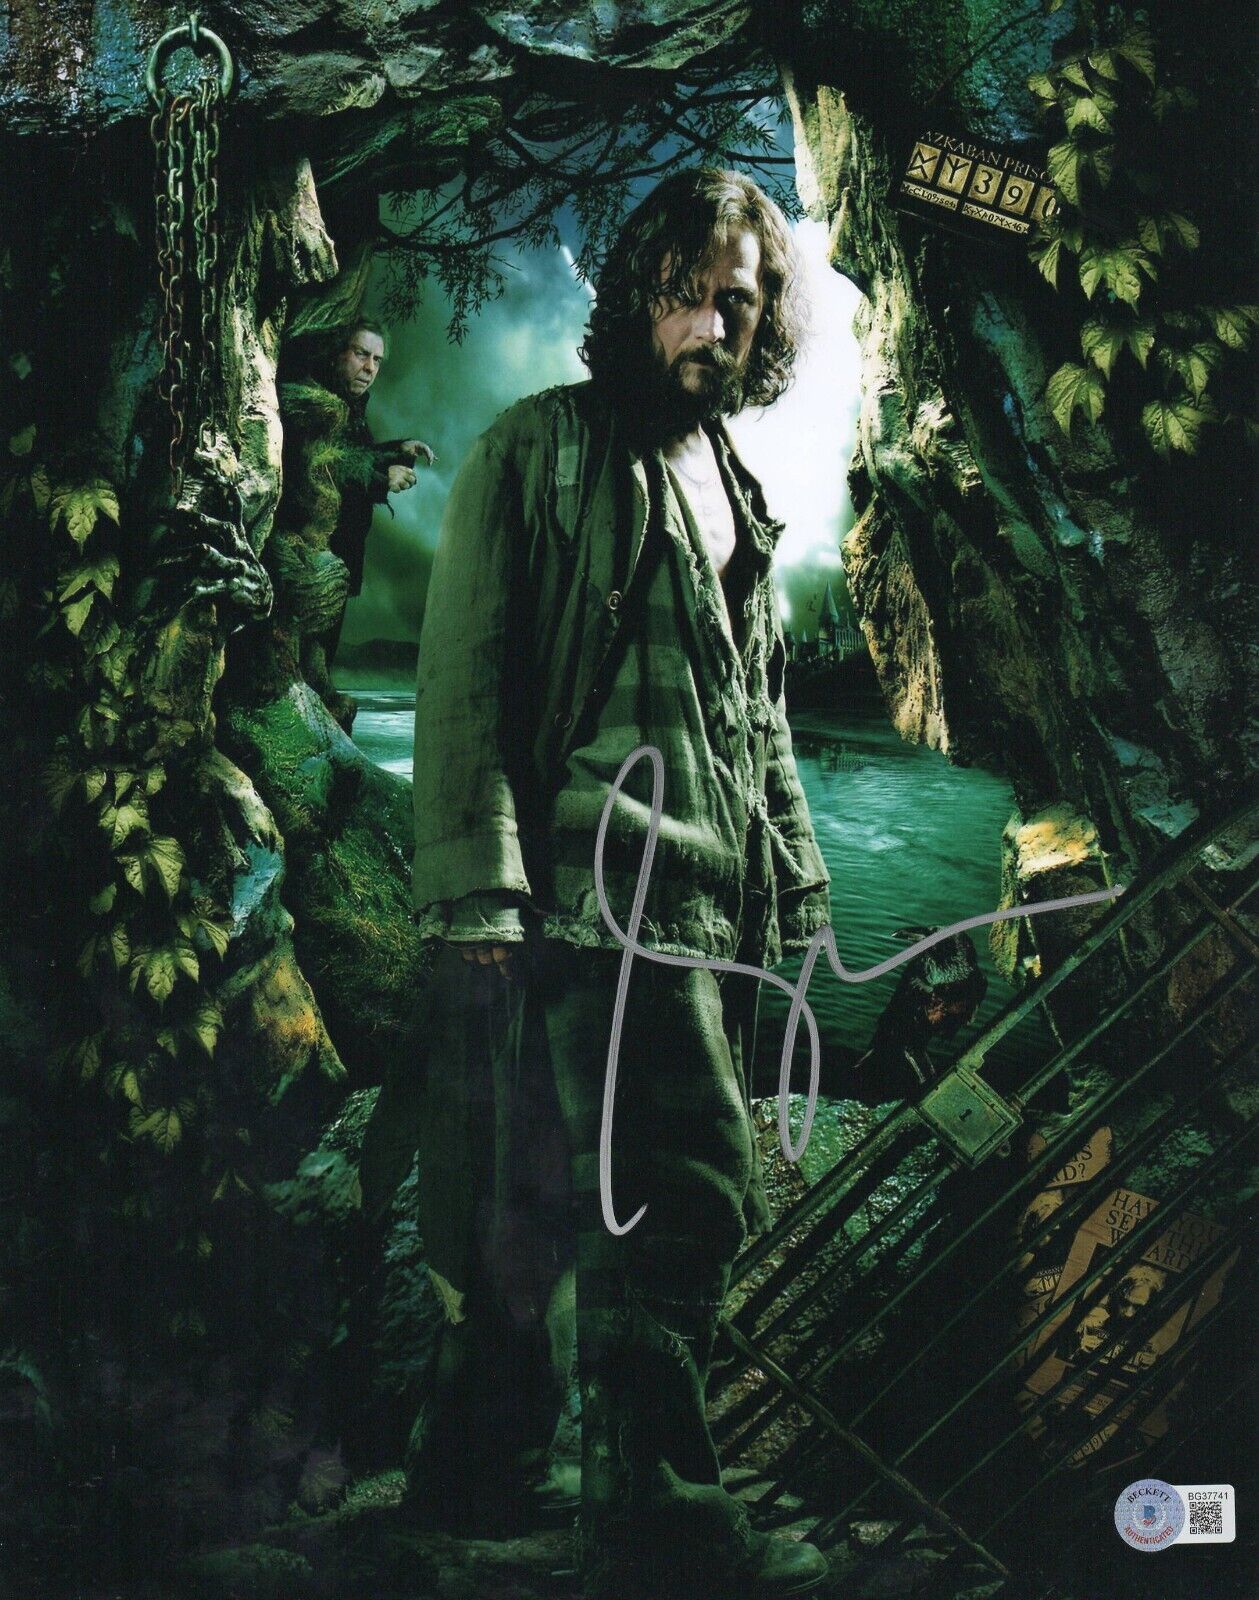 Gary Oldman Authentic Autographed Sirius Black Harry Potter 16 Funko Pop  Figure